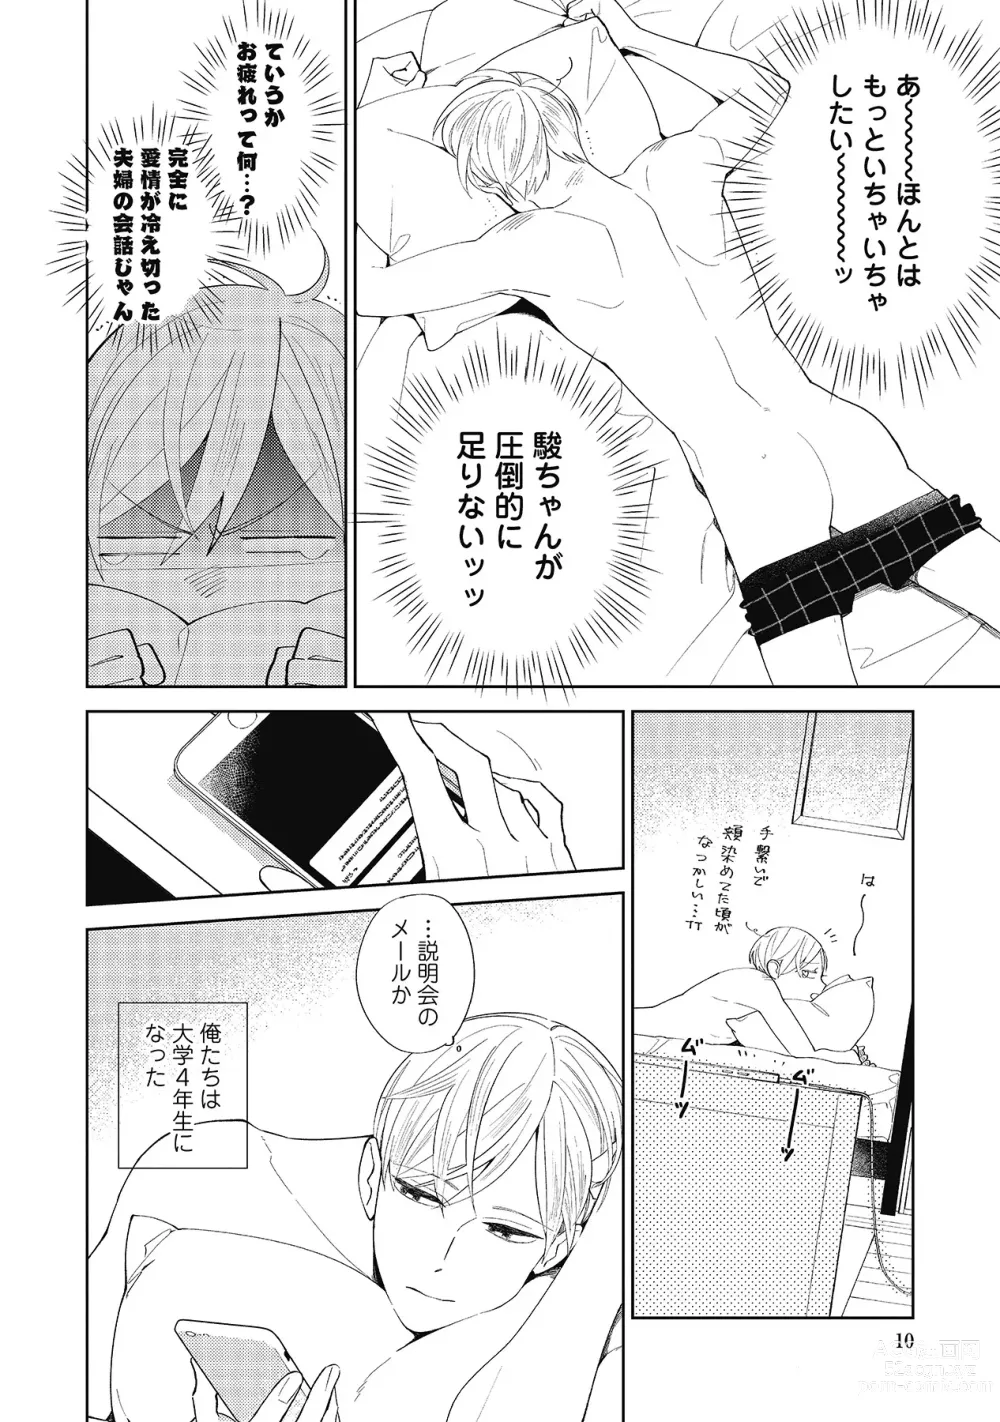 Page 10 of manga Sentimental Darling